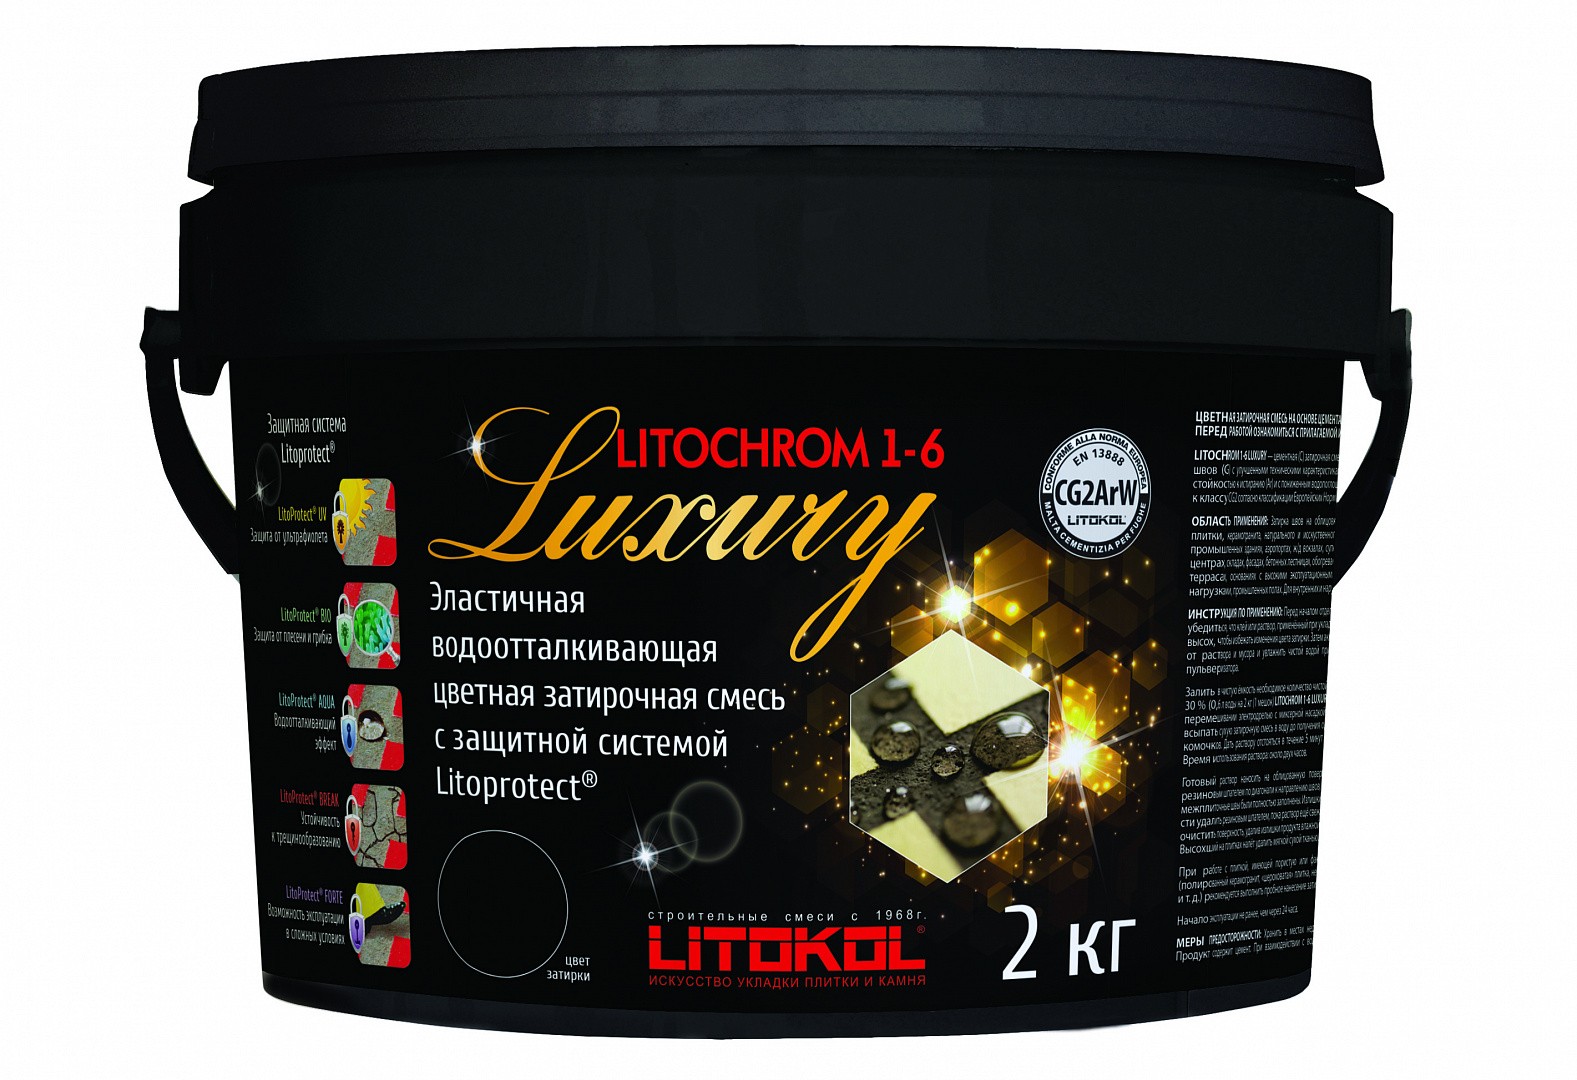 Цементная затирочная смесь LITOCHROM 1-6 LUXURY C.200